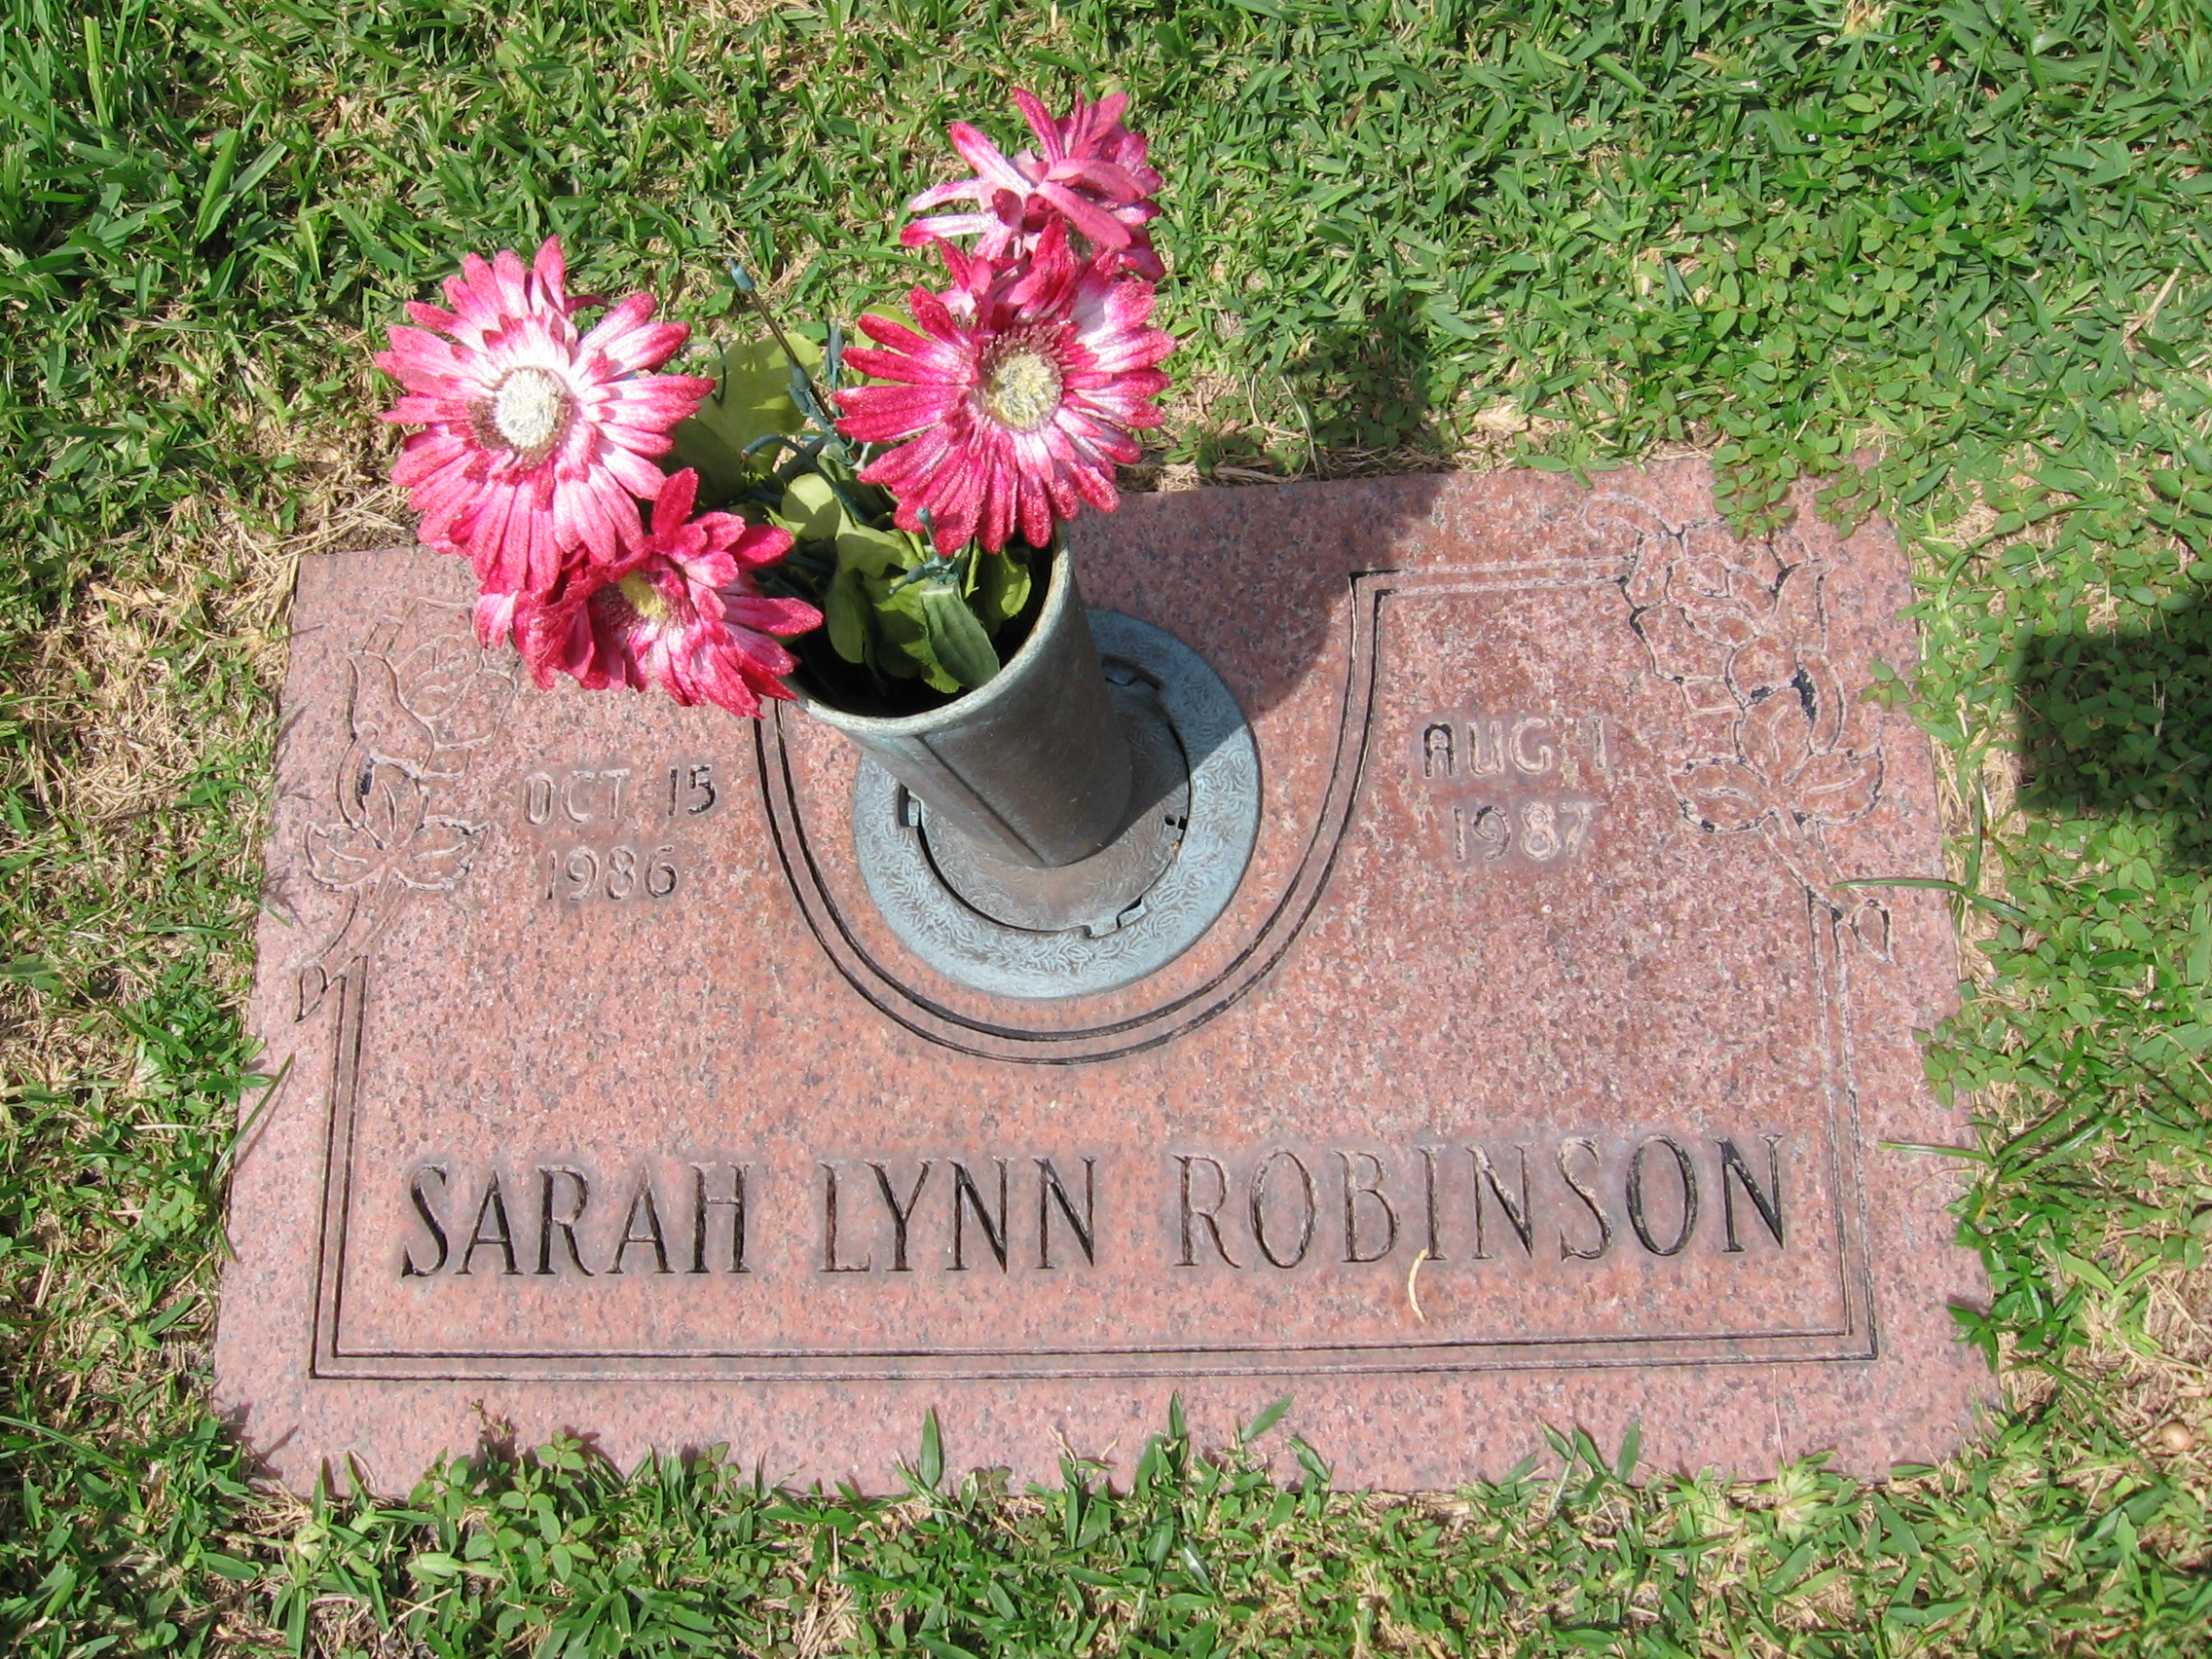 Sarah Lynn Robinson